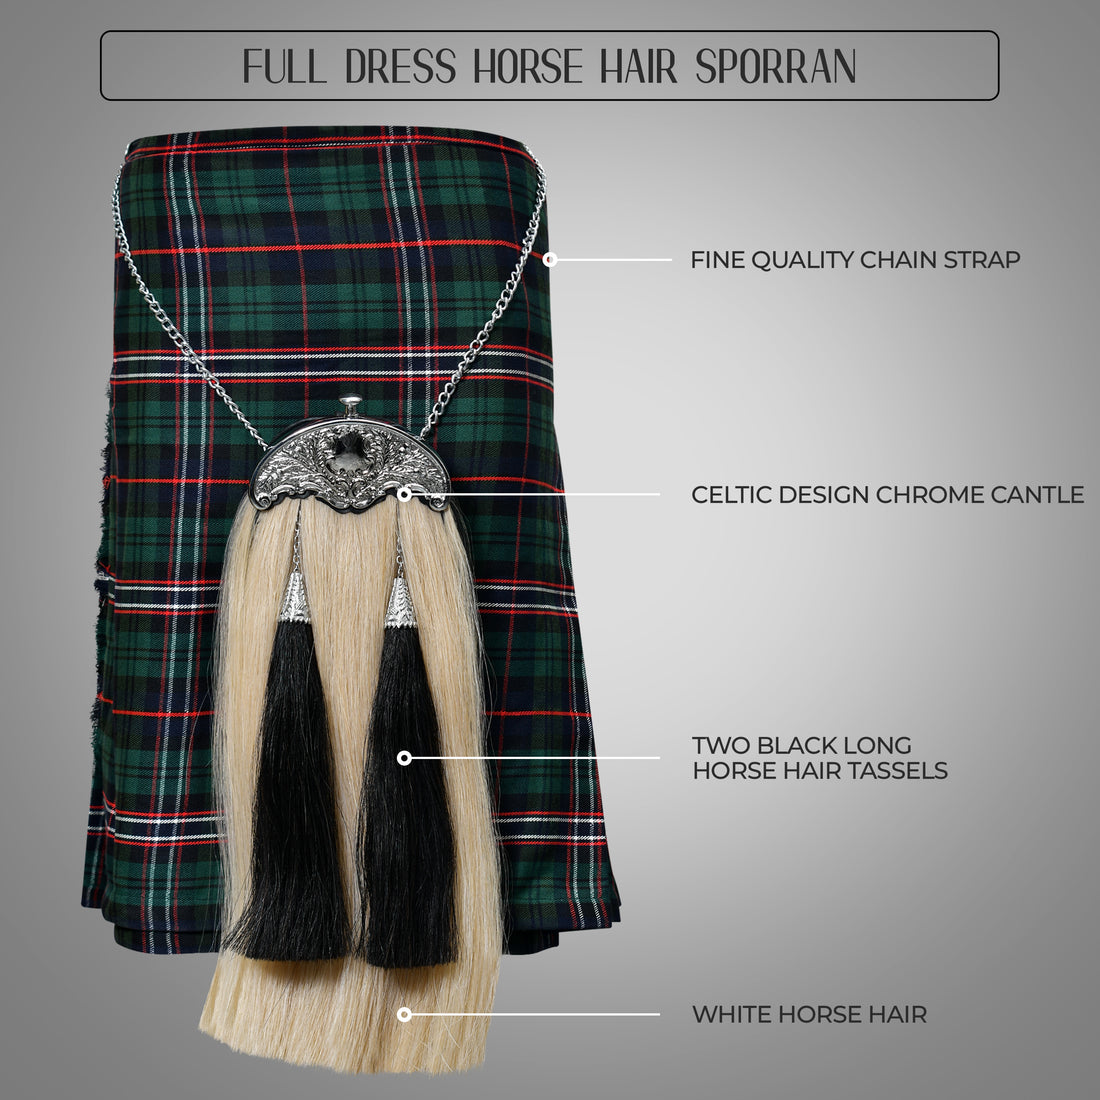 Full Dress Horse Hair Sporran with black horse hair tassels - Traditional Scottish formal accessory